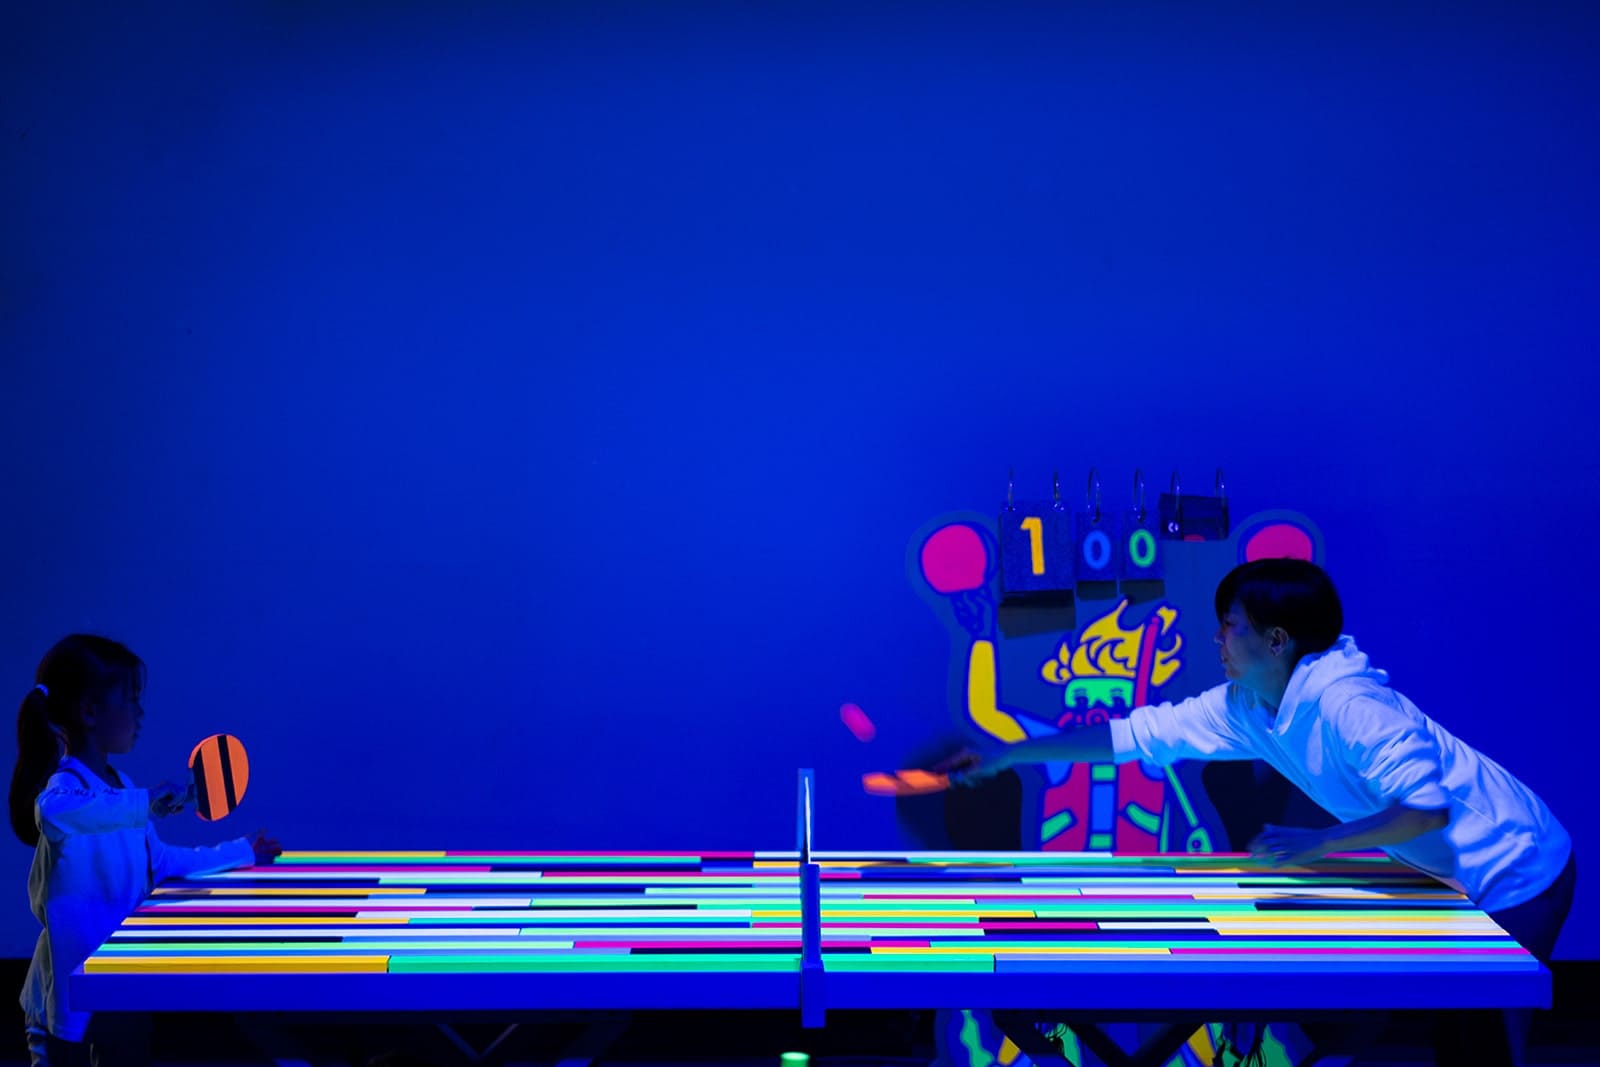 Luminous Ping-Pong